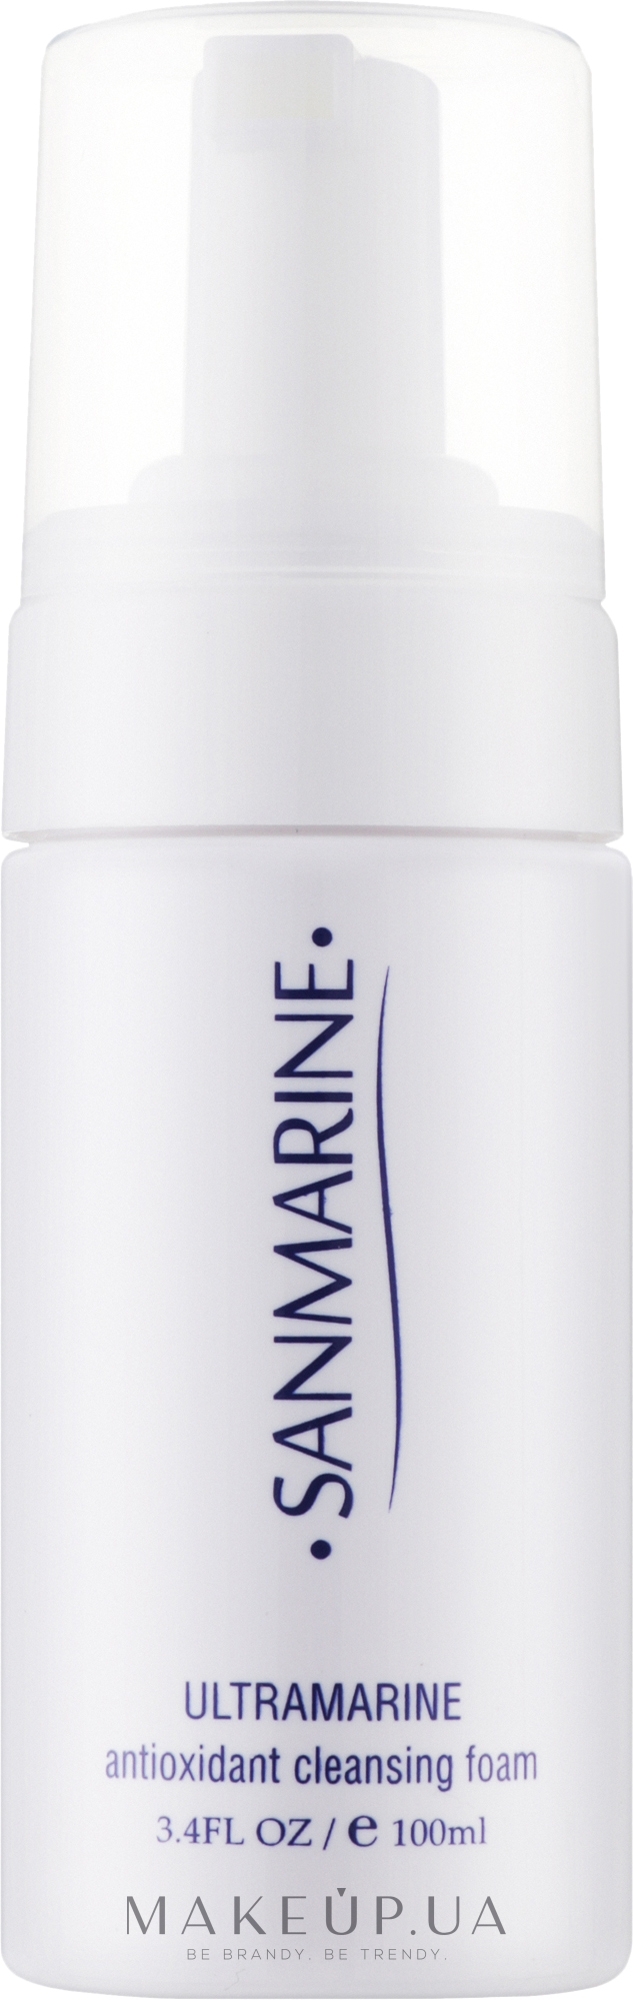 Антиоксидантная очищающая пенка для лица - Sanmarine Ultramarine Antioxidant Cleansing Foam — фото 100ml